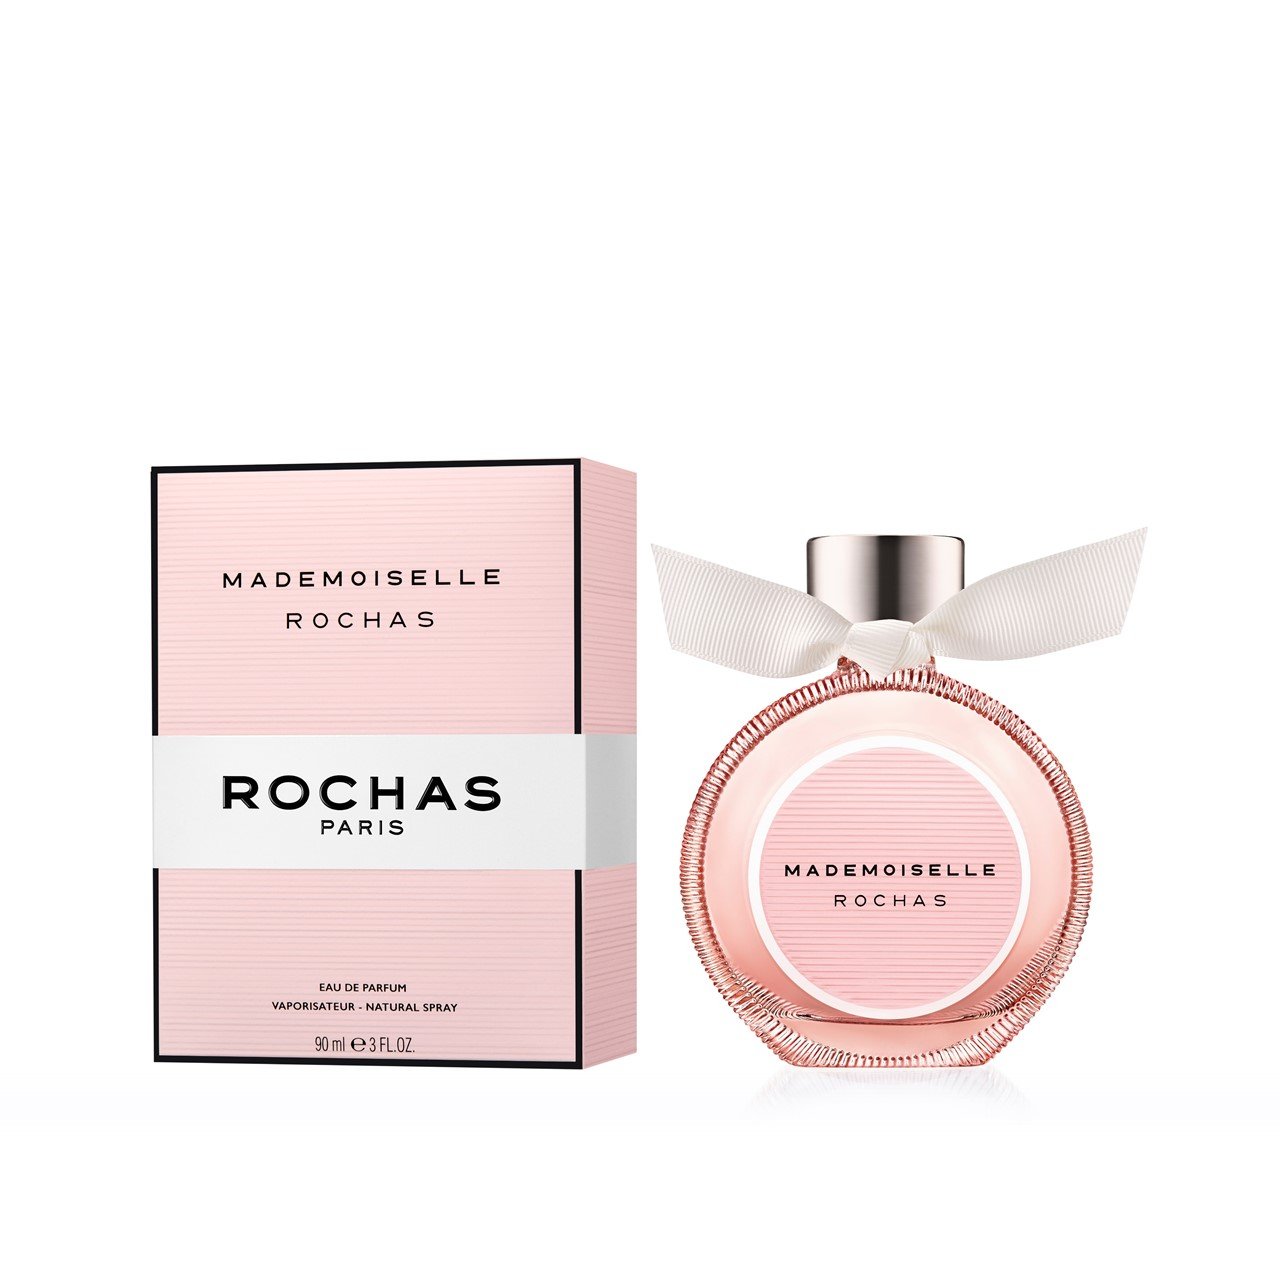 Rochas Mademoiselle Rochas Eau de Parfum 90ml (3.0fl oz)